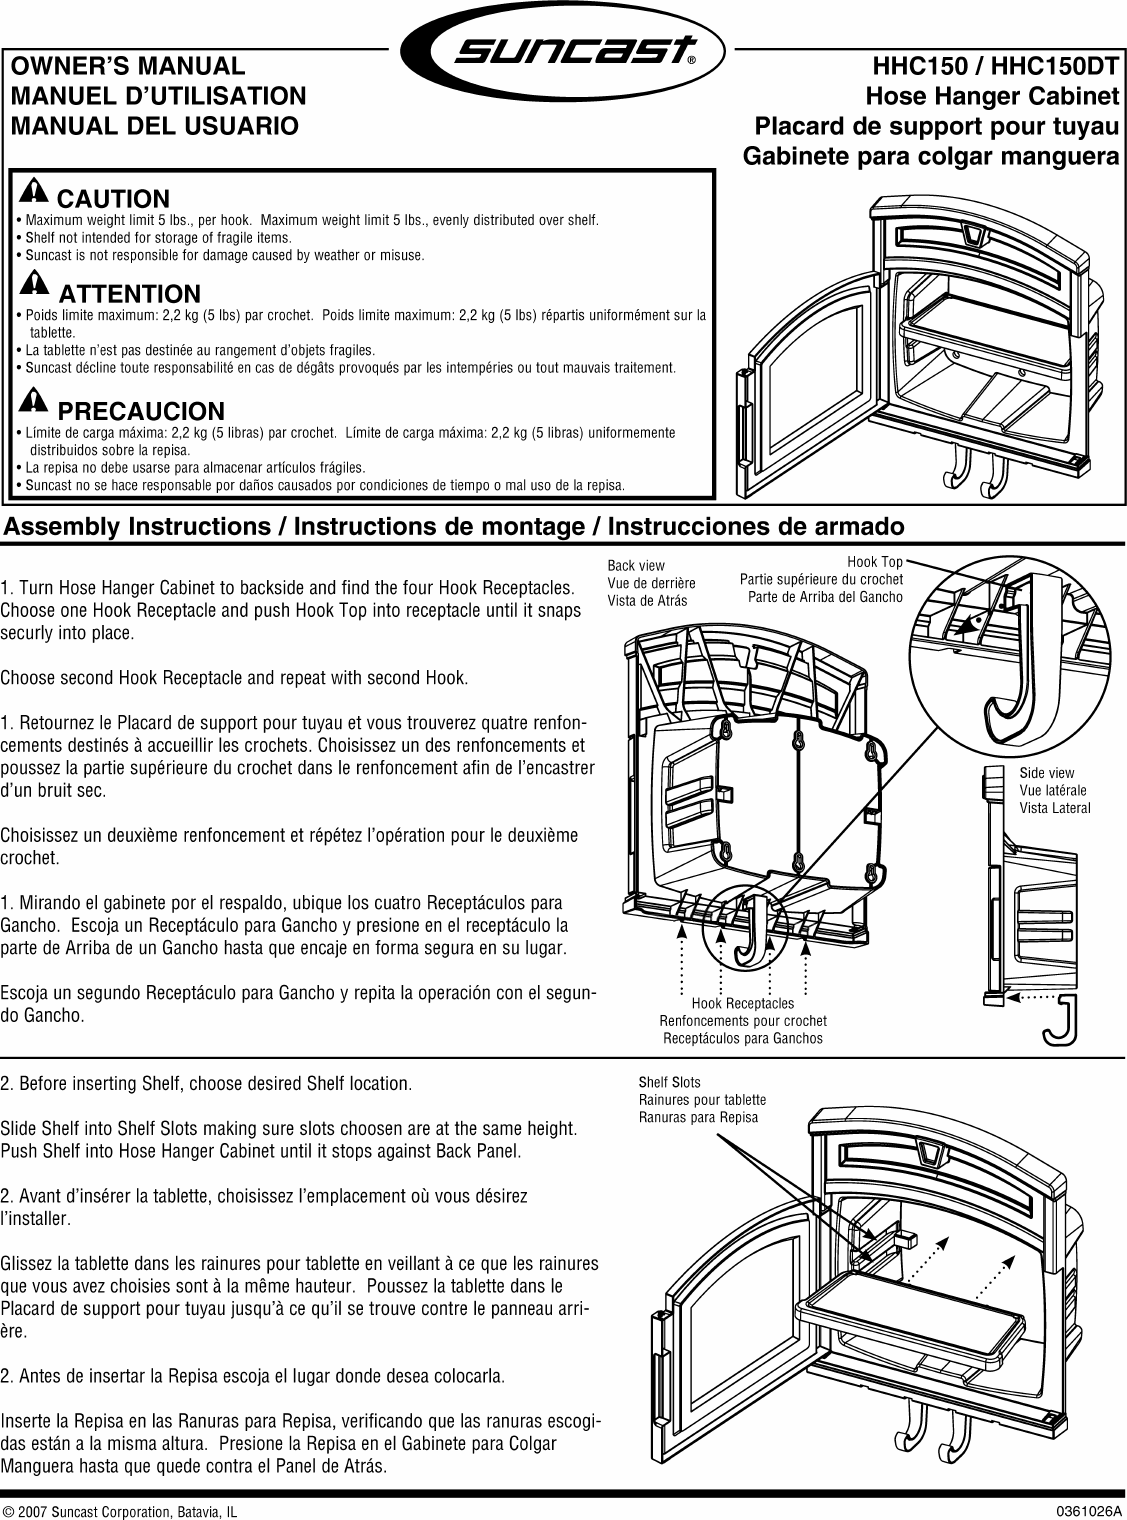 Page 1 of 2 - Suncast Suncast-Hhc150-Users-Manual-  Suncast-hhc150-users-manual